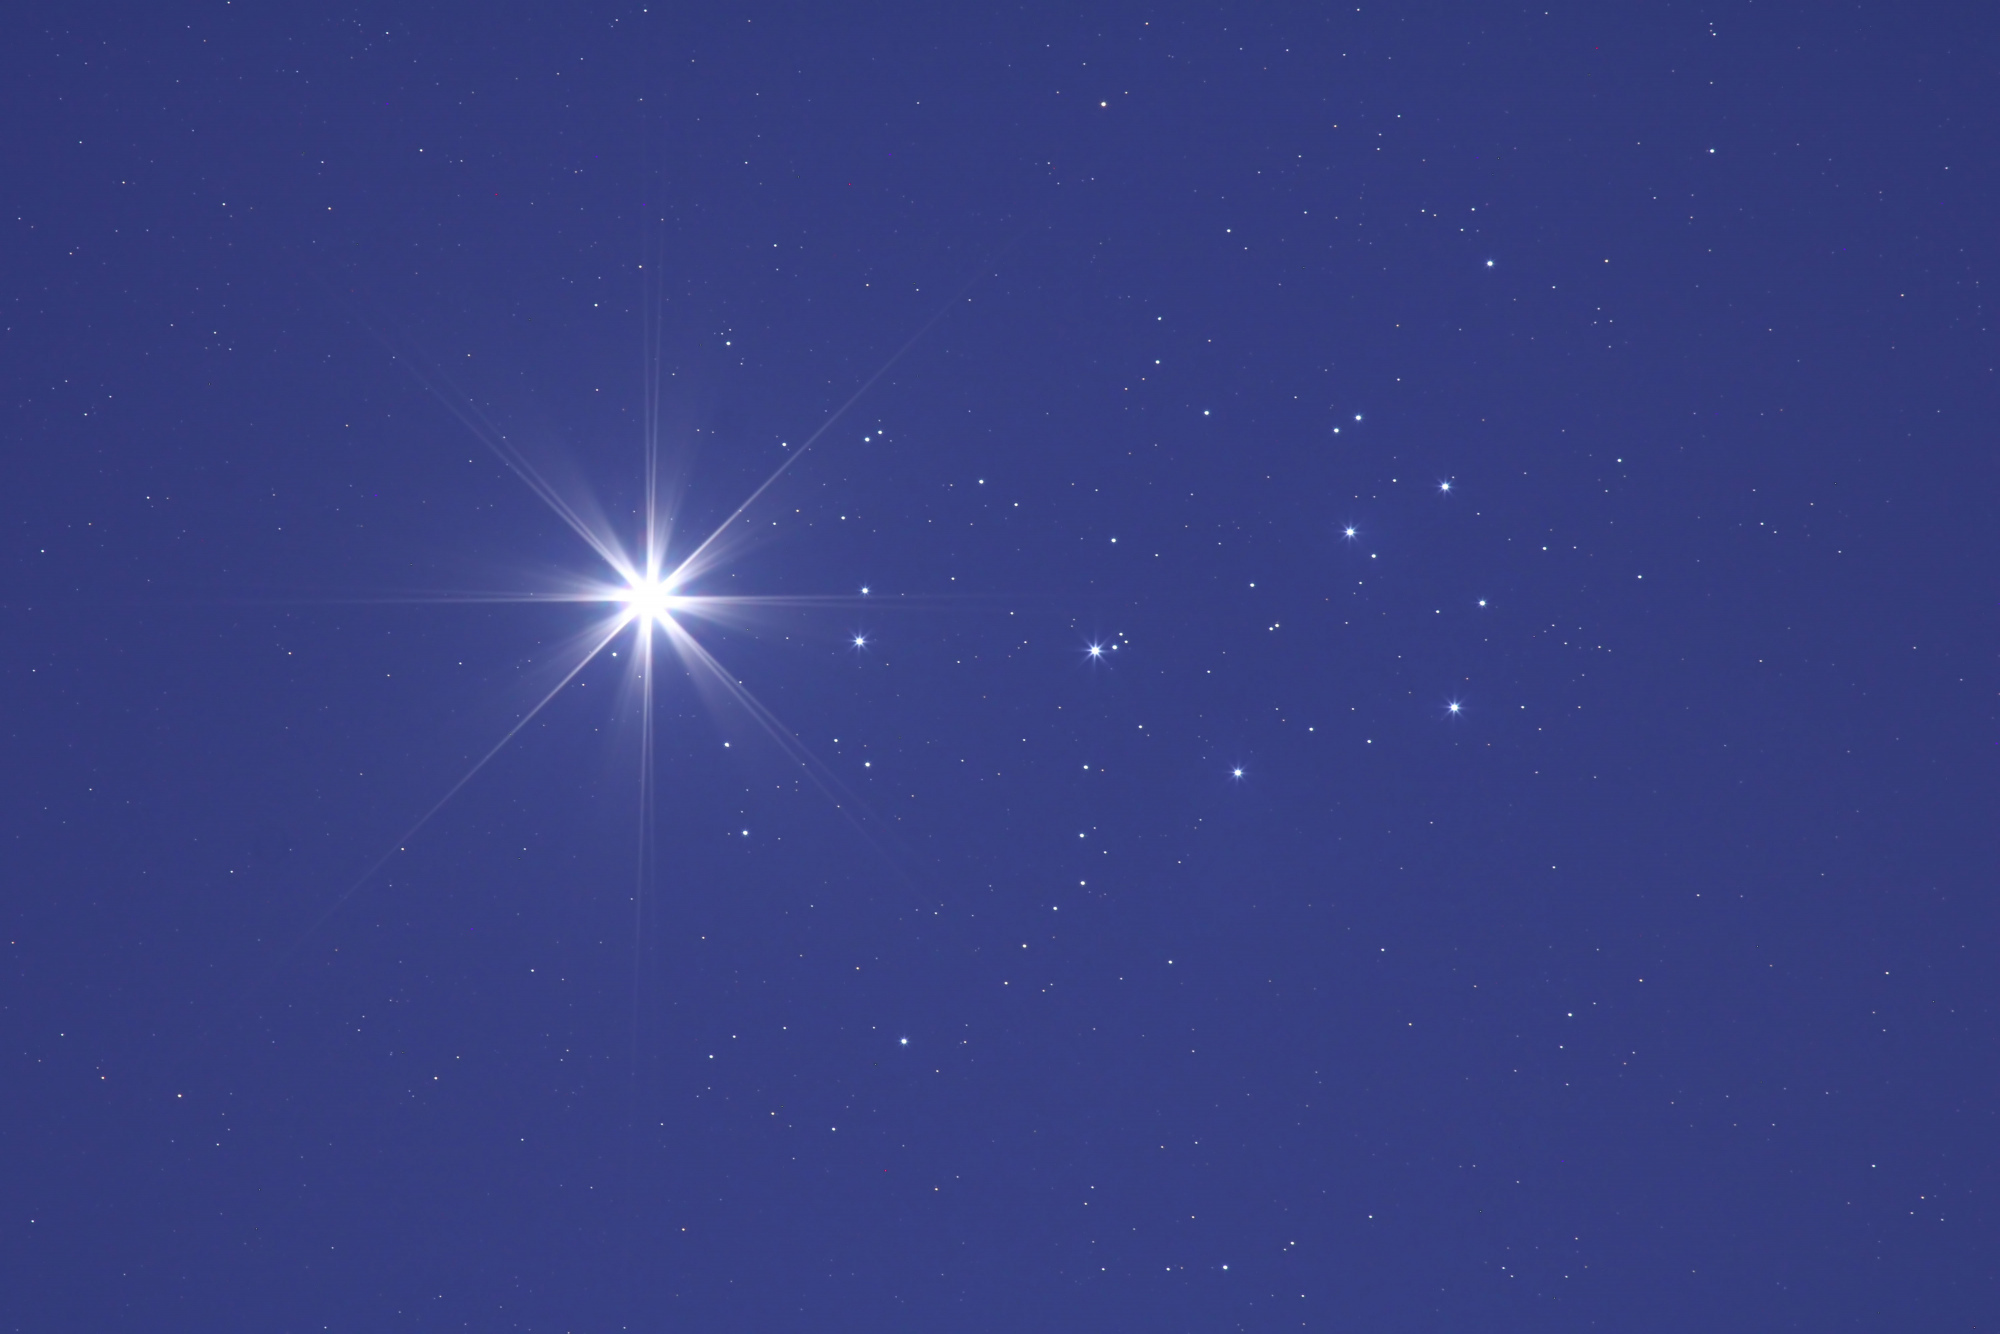 Venus Pleiades 4 avril 2446B1N1 send.jpg